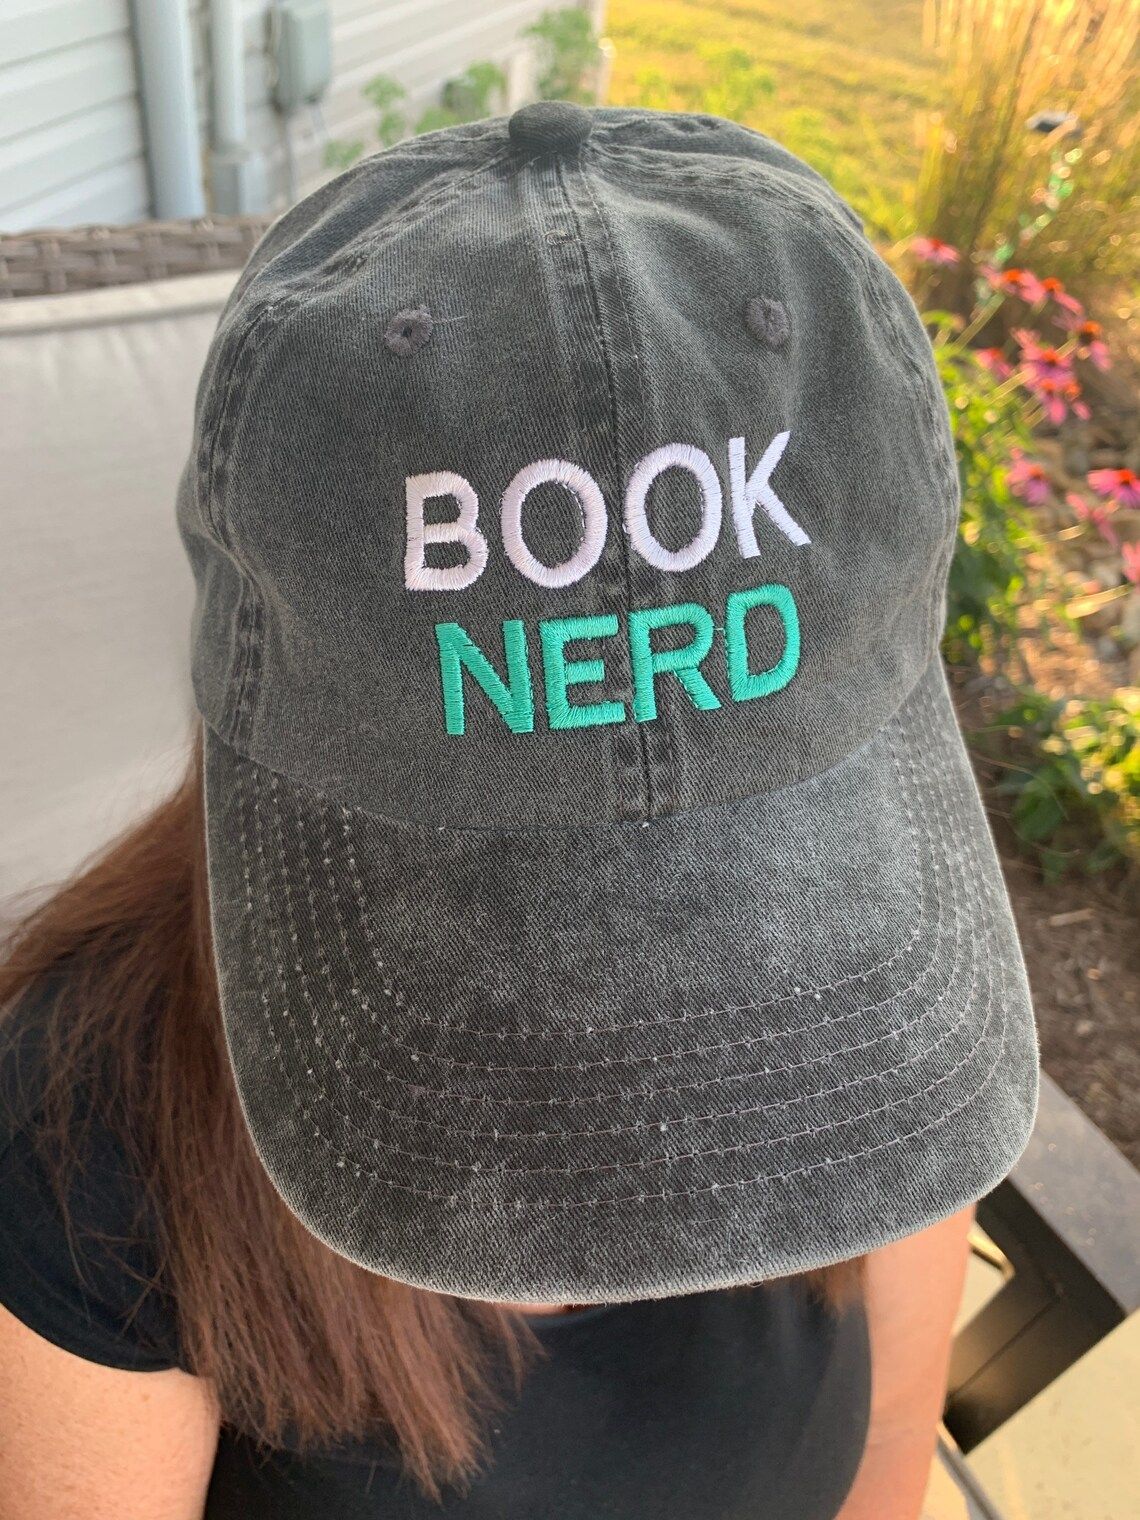  hat that says "Book Nerd"